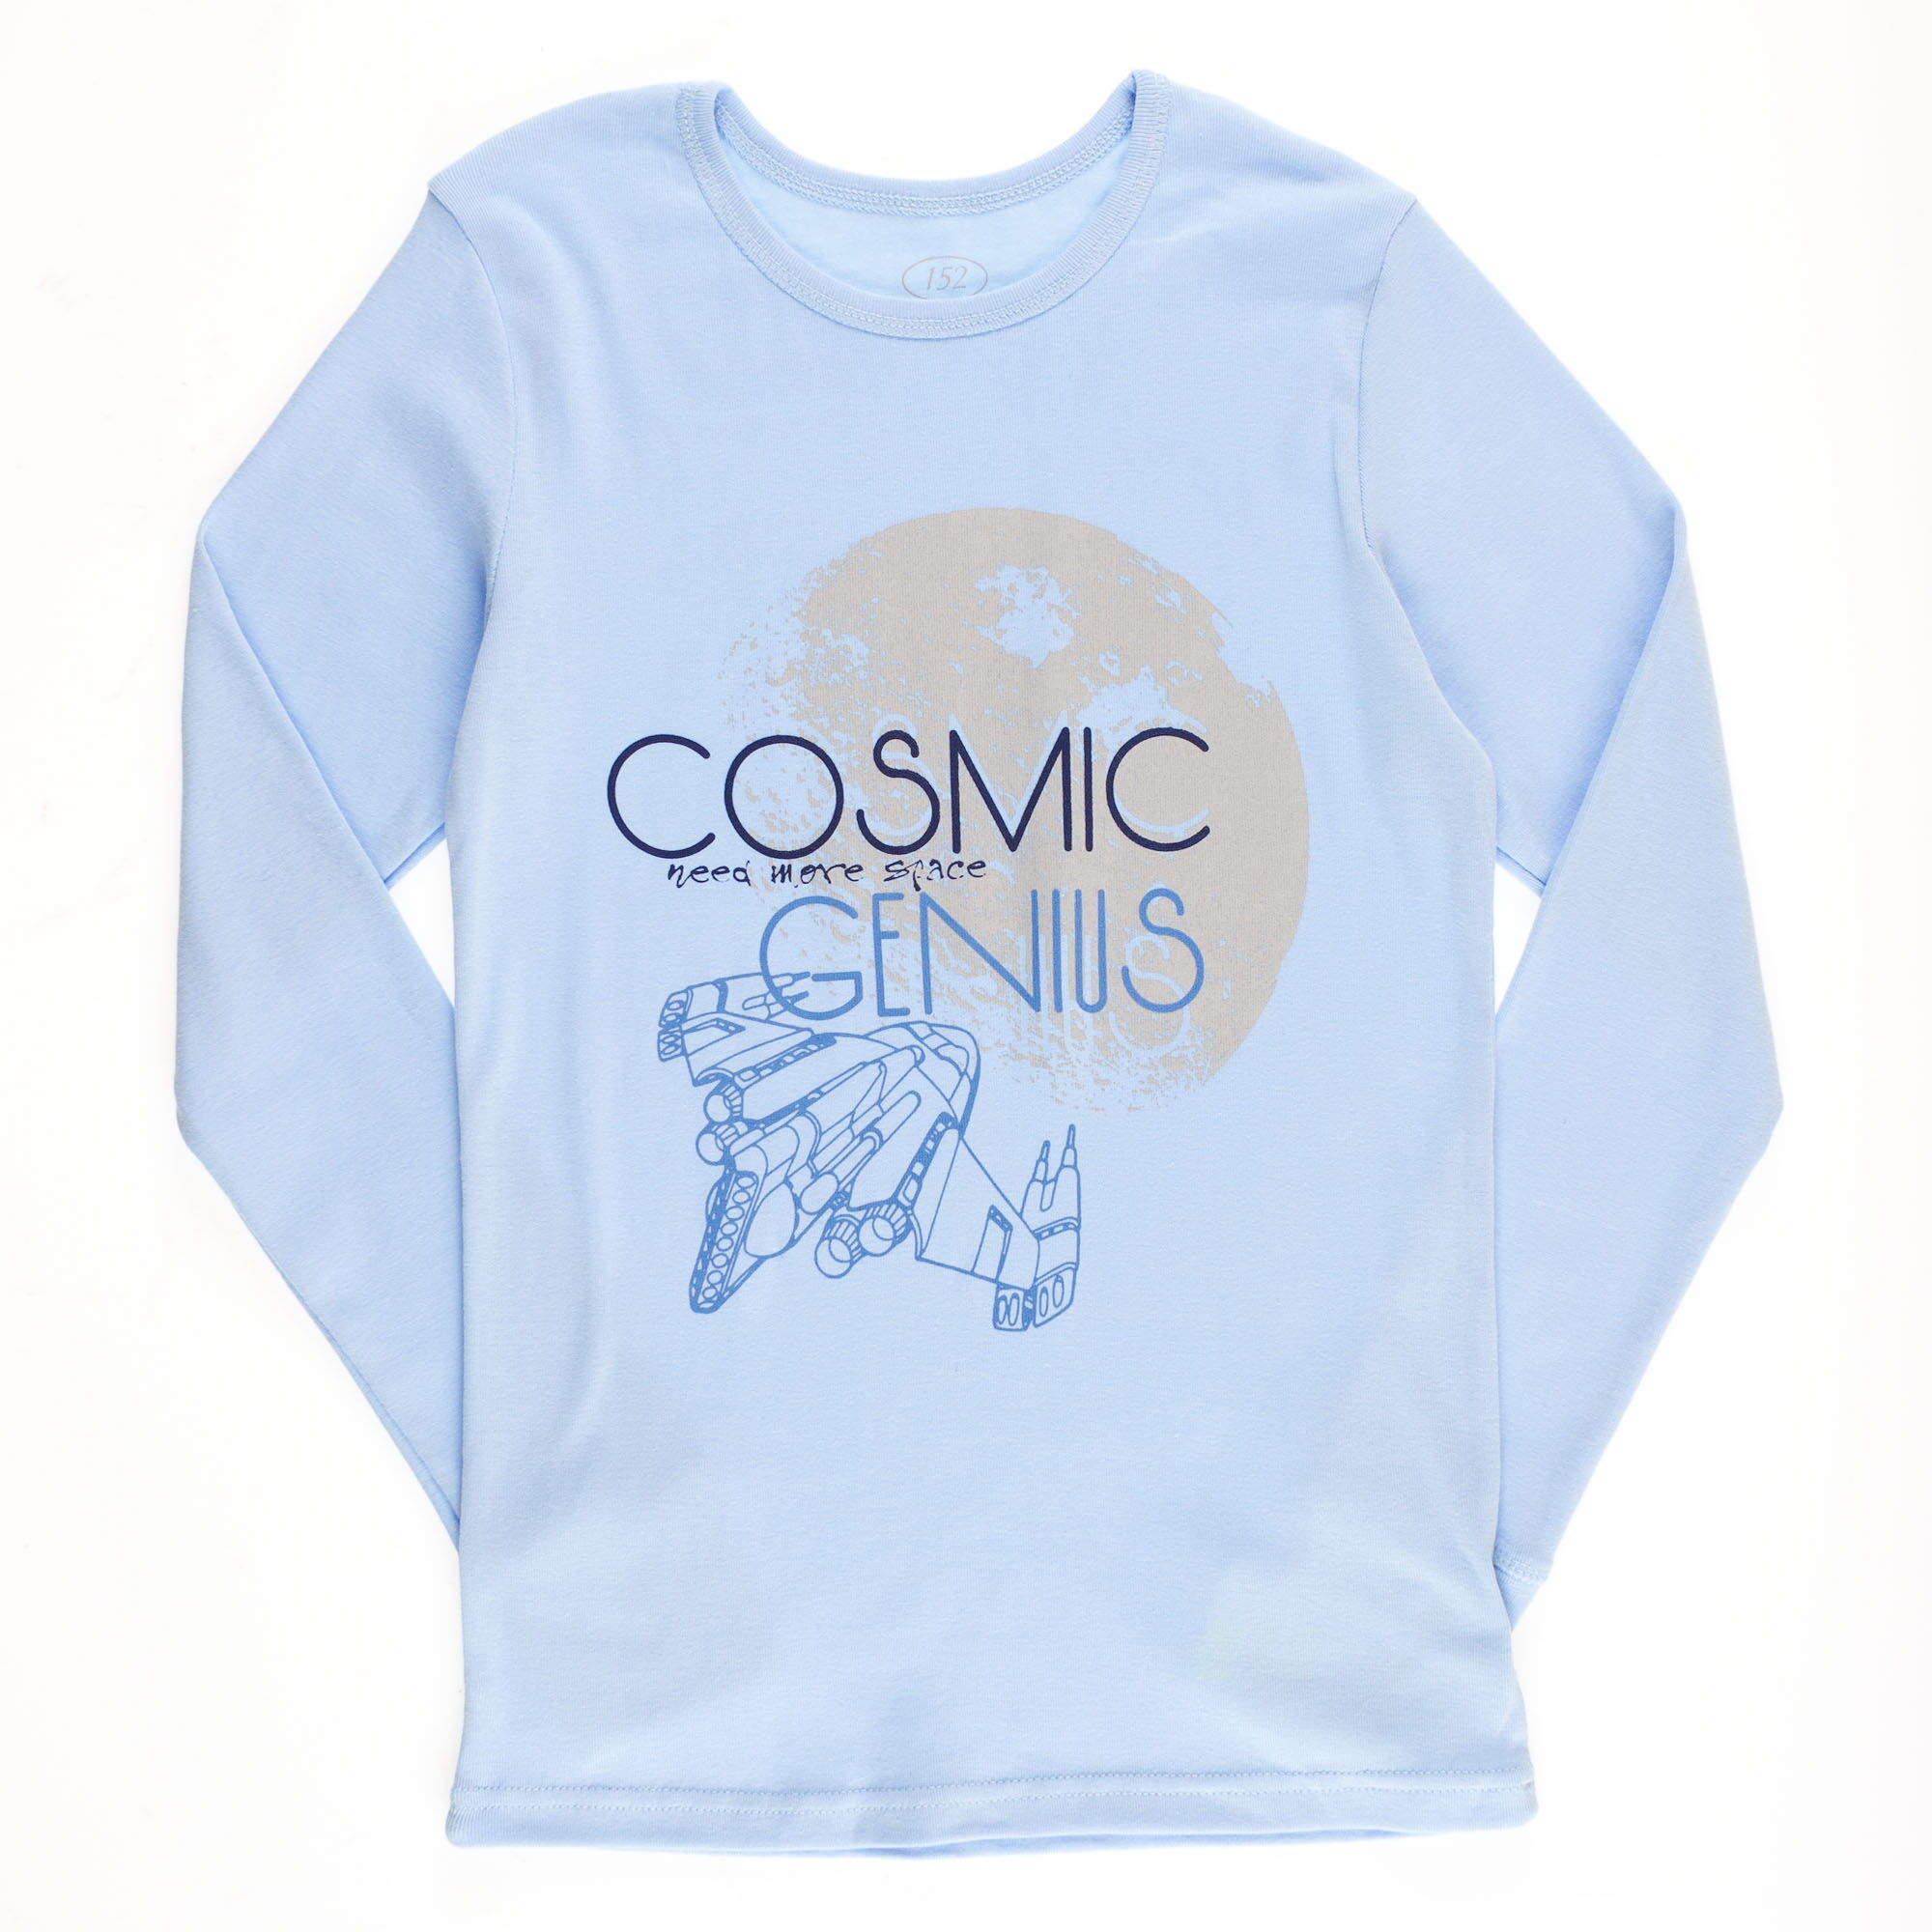 Пижама для мальчика Фламинго Соsmic голубая 283-1006 - купить